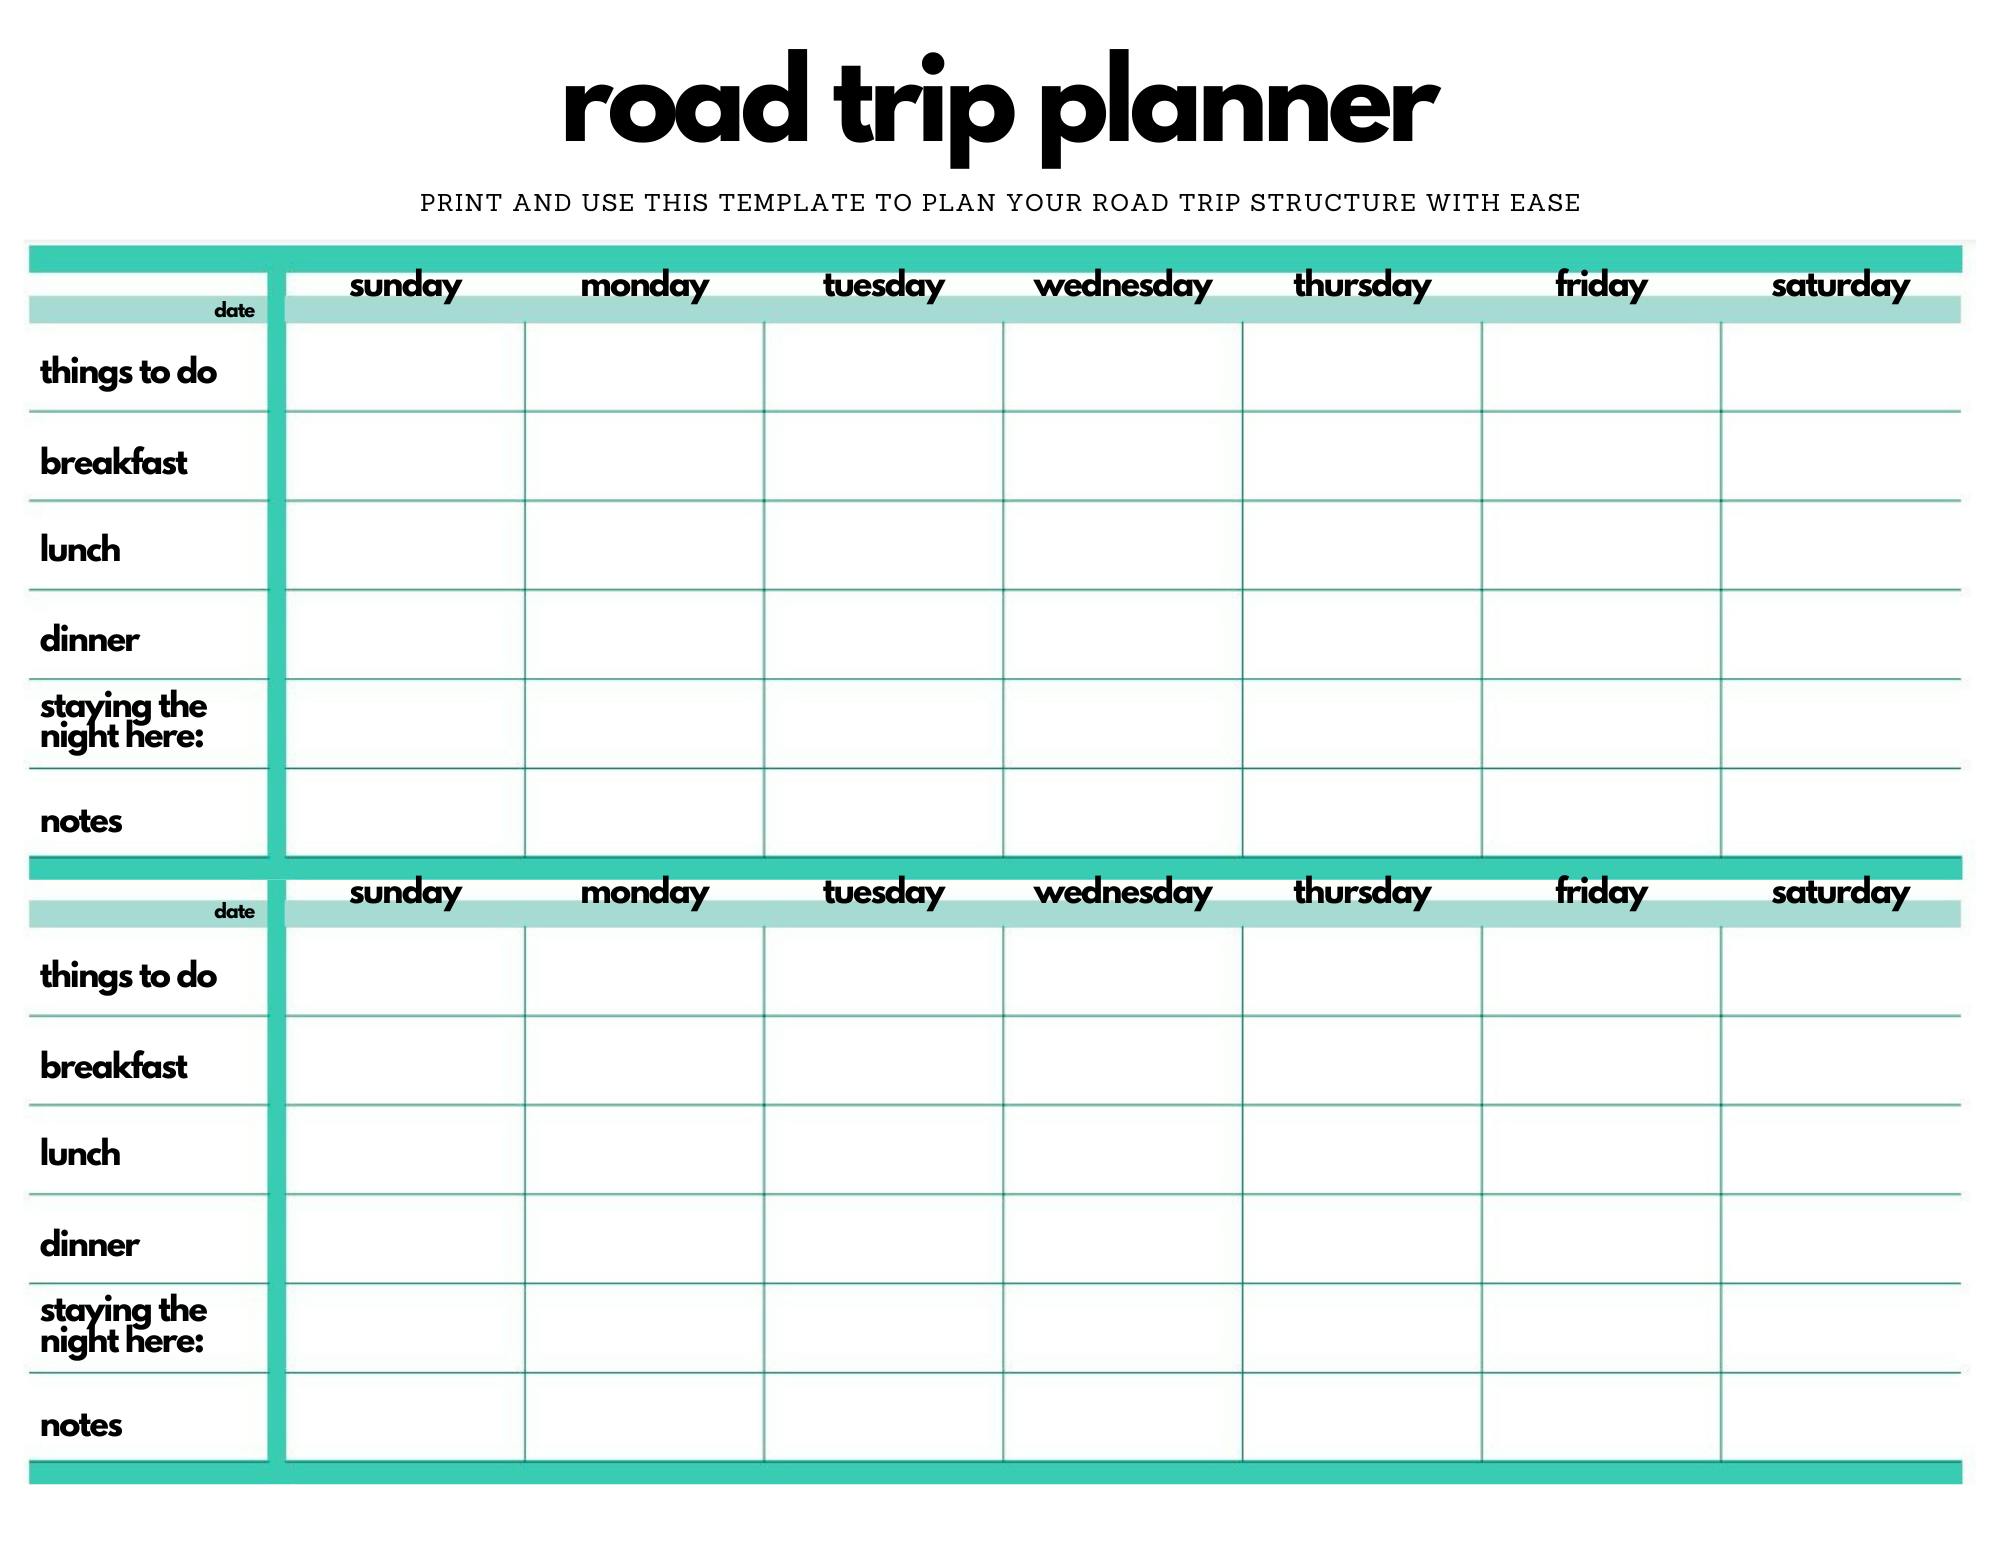 my trip planner